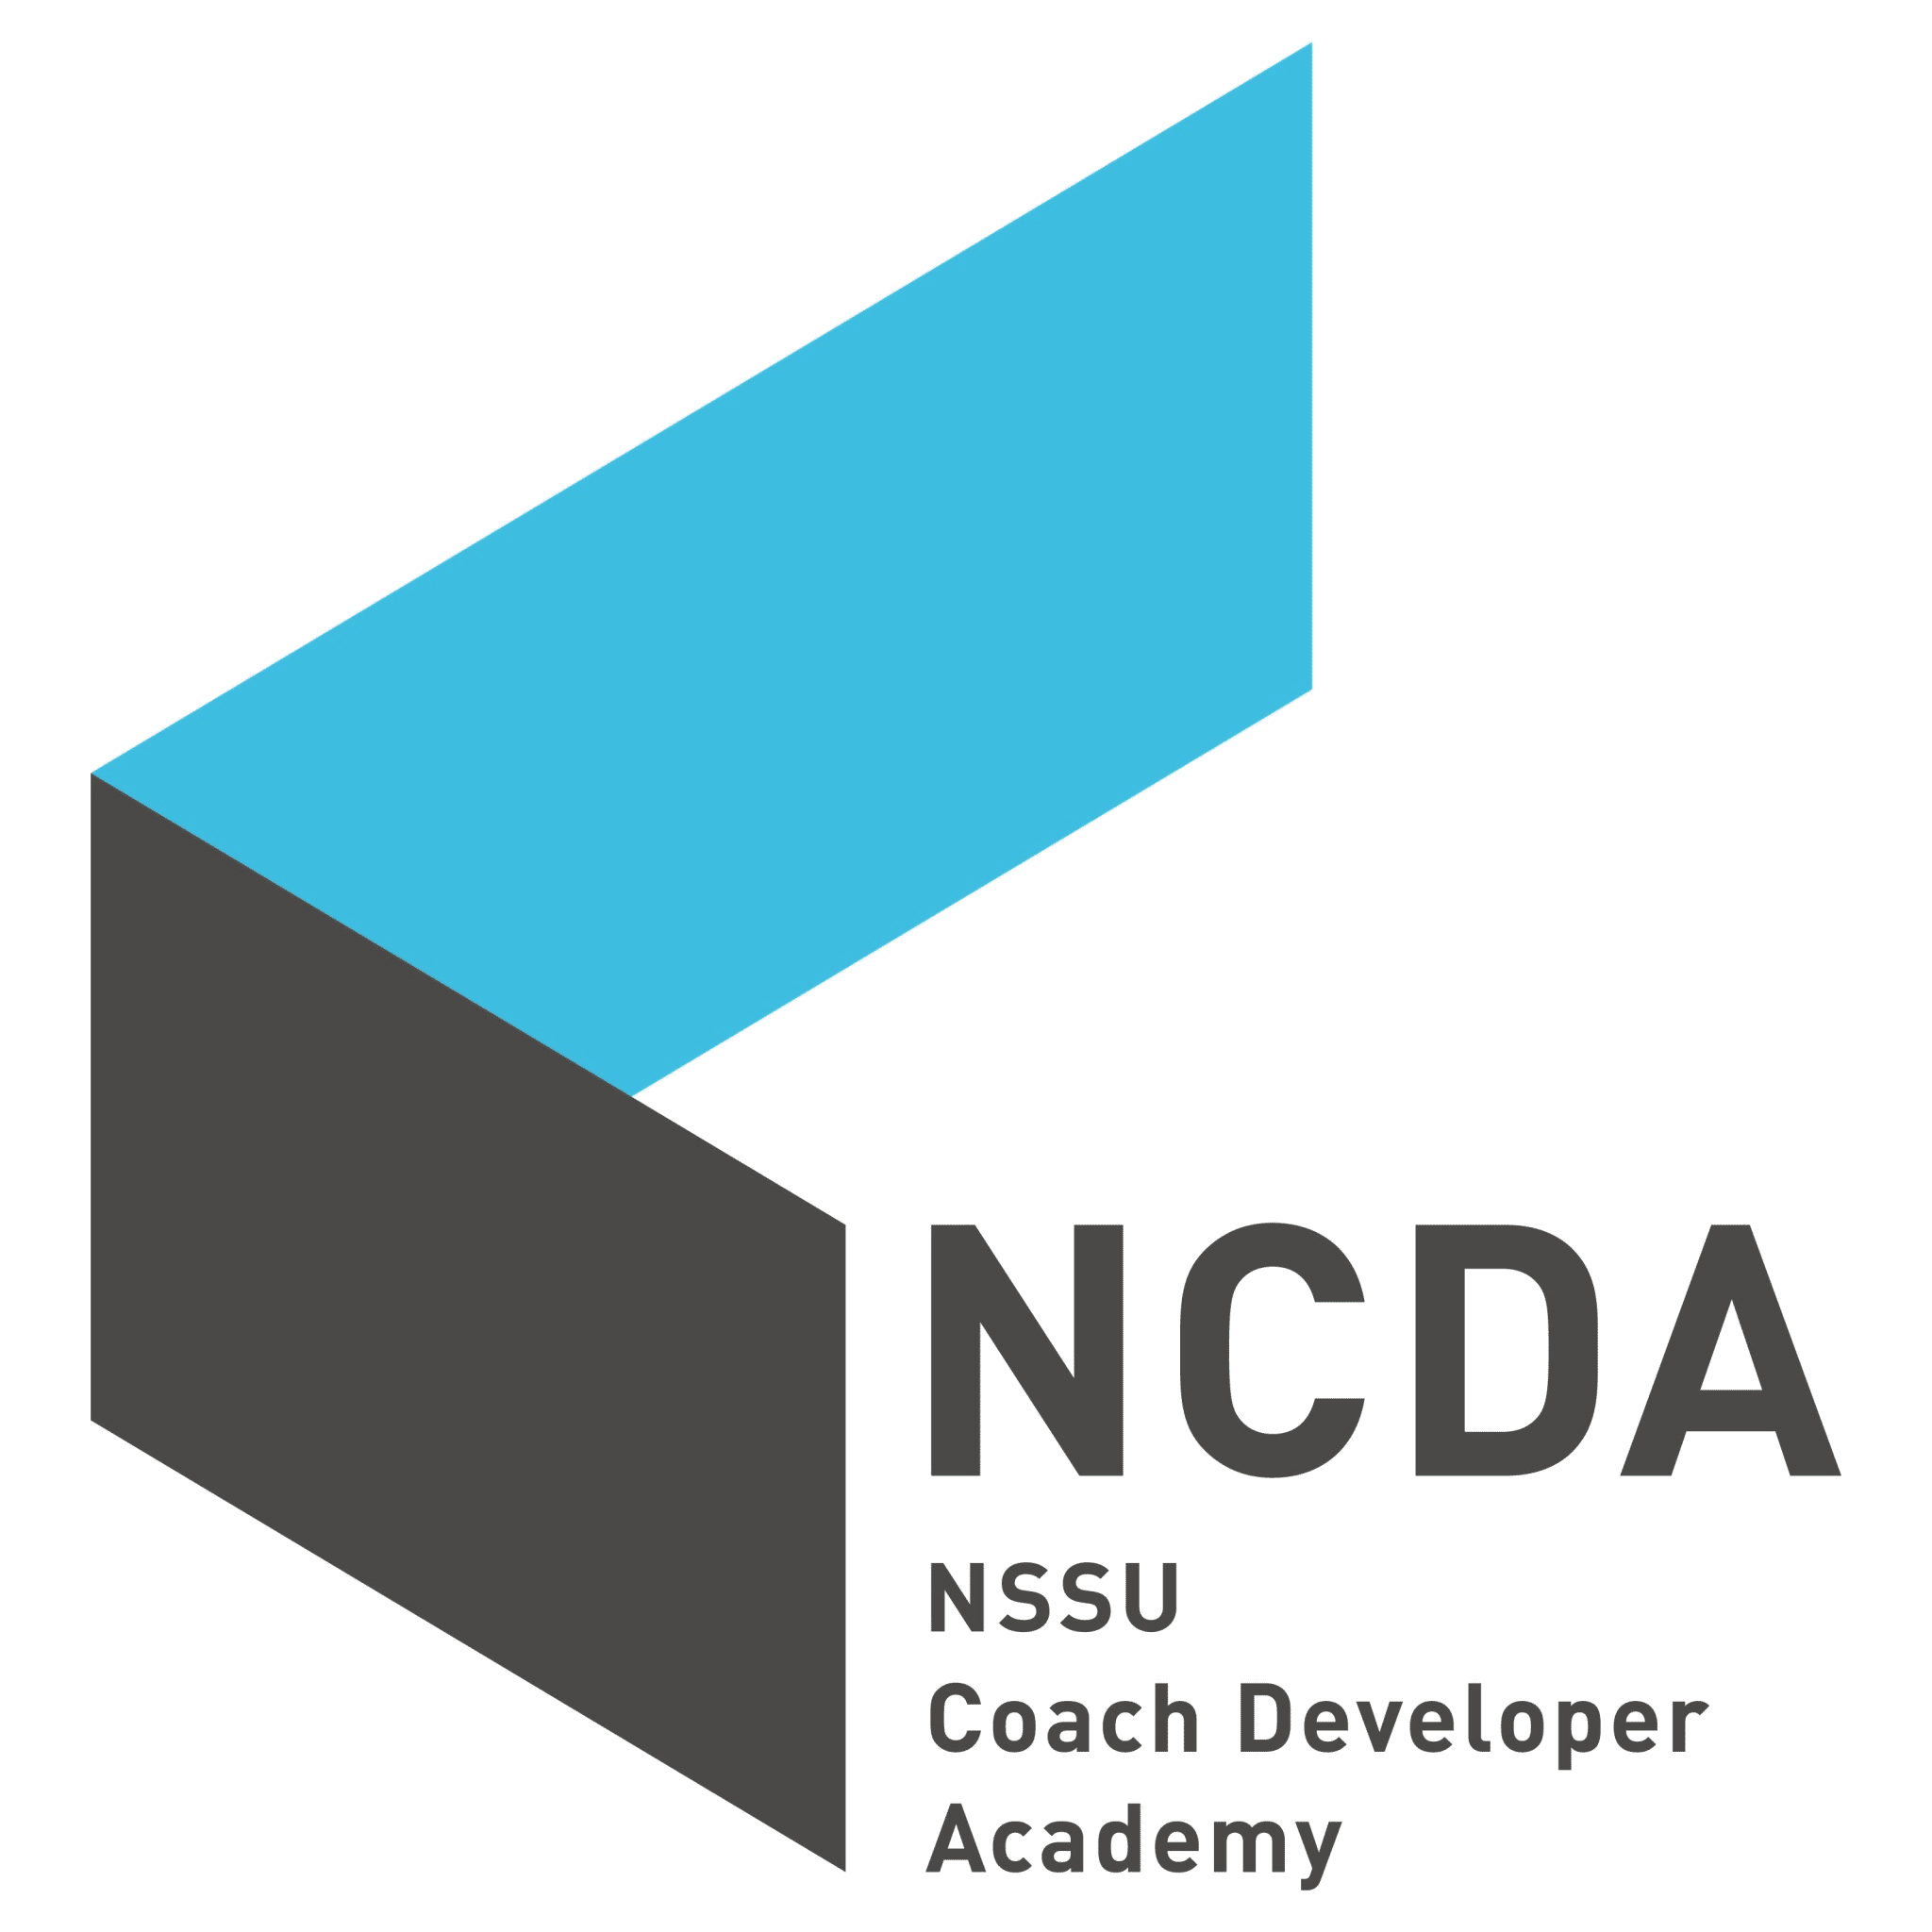 NCDA NSSU Coach Developer Academy